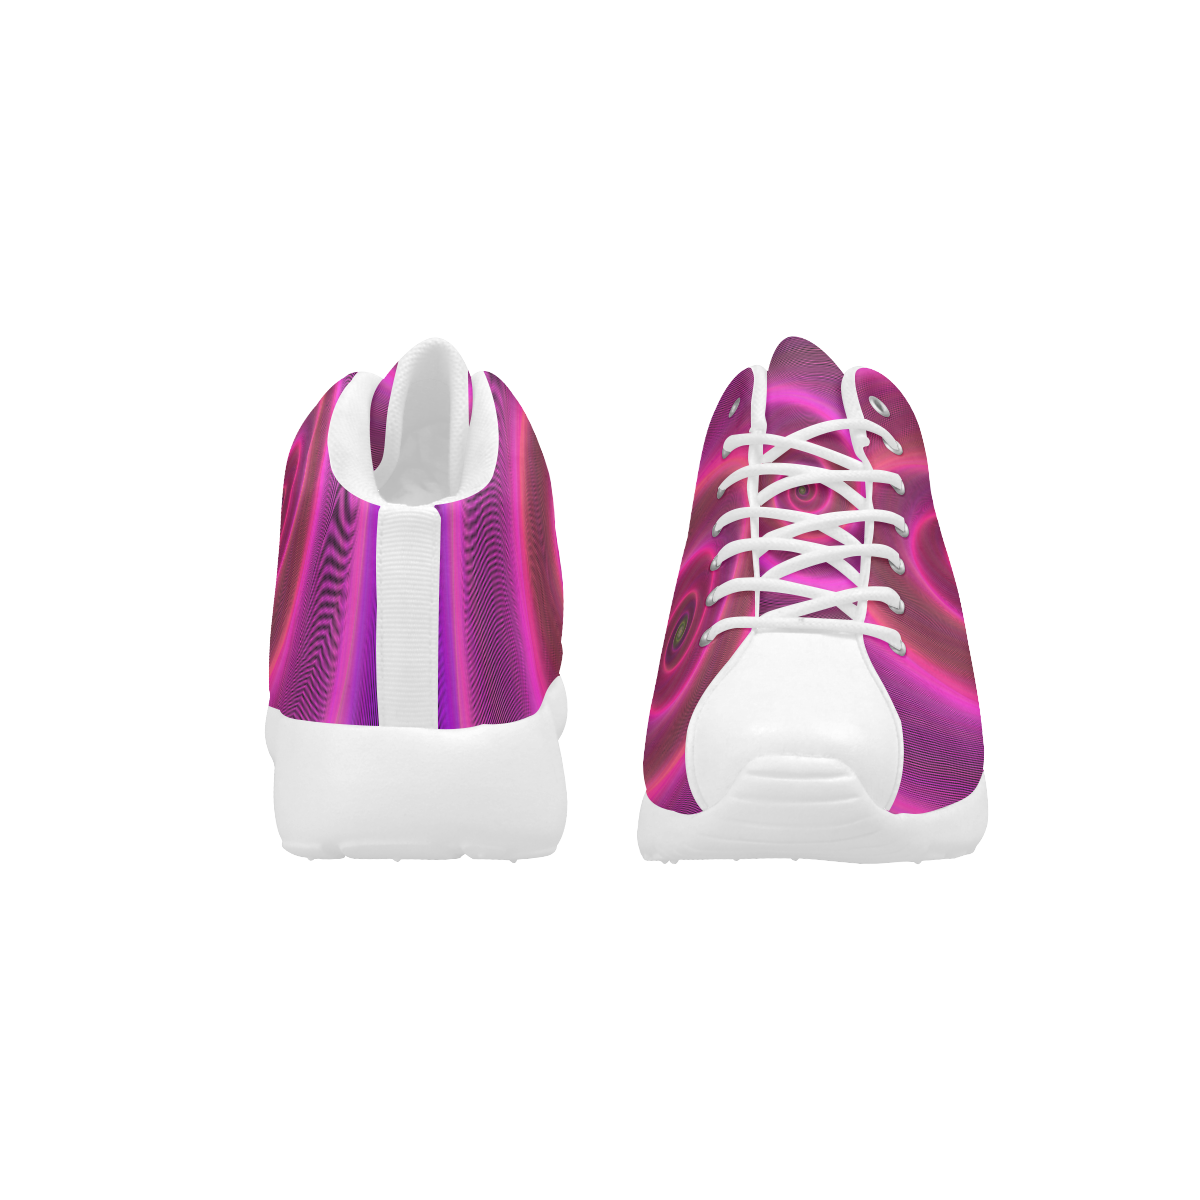 Pink Swirl Women's Basketball Training Shoes (Model 47502)